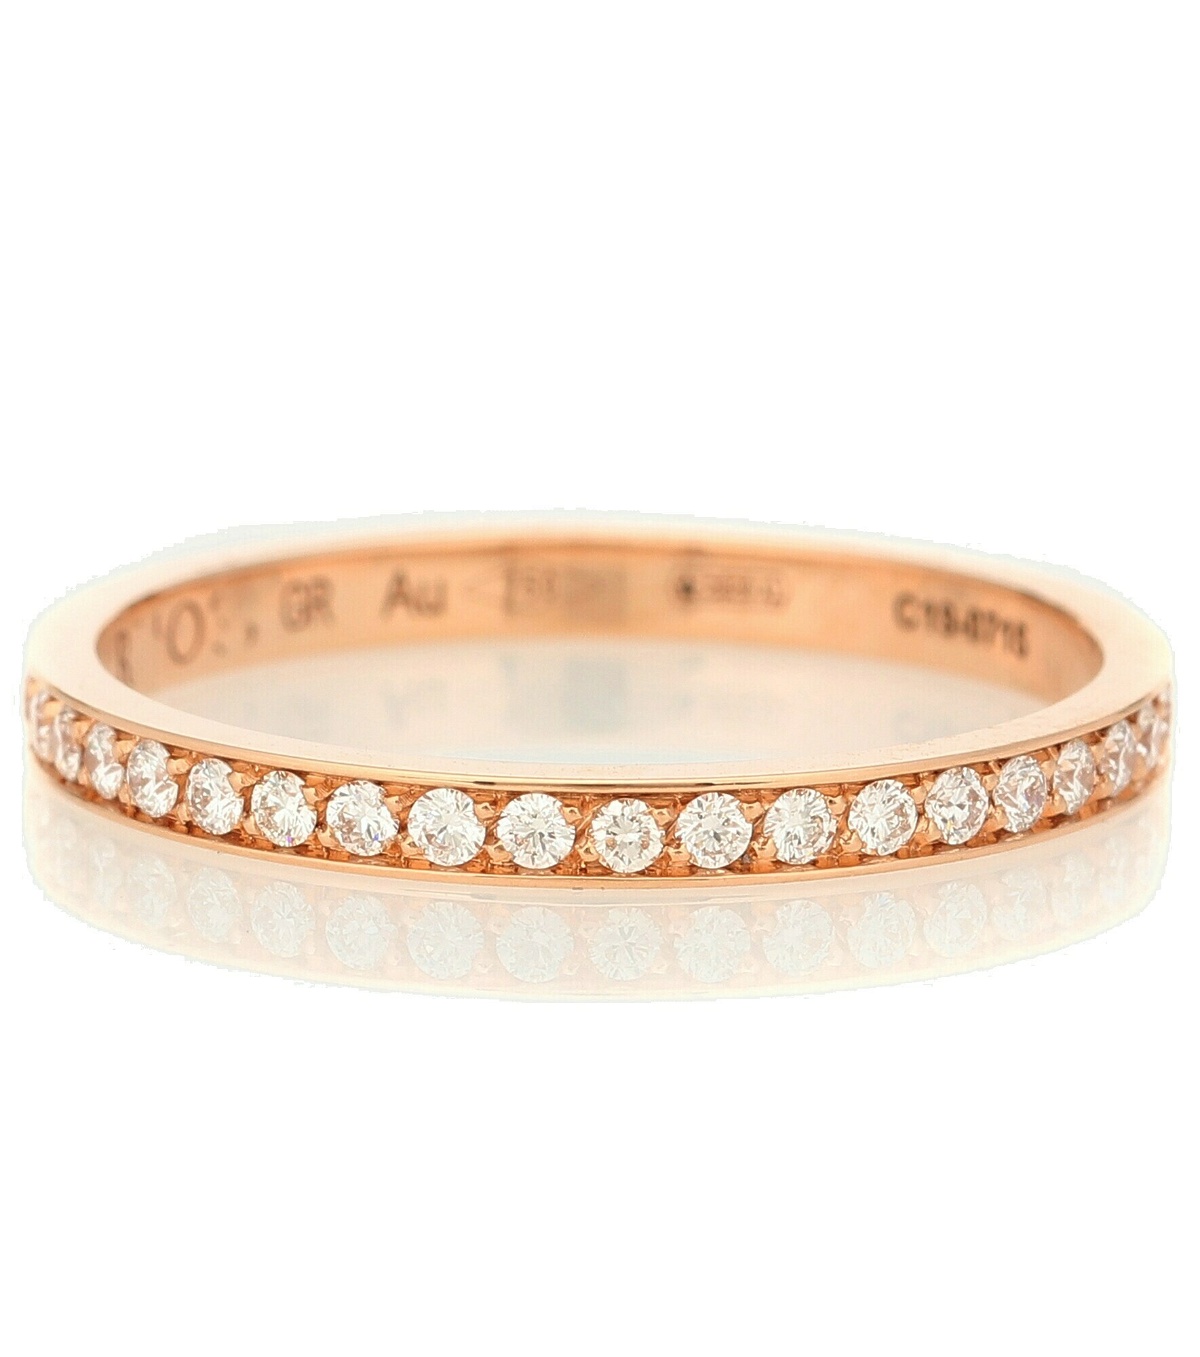 Repossi - Berbere XS 18kt rose gold ring with diamonds Repossi